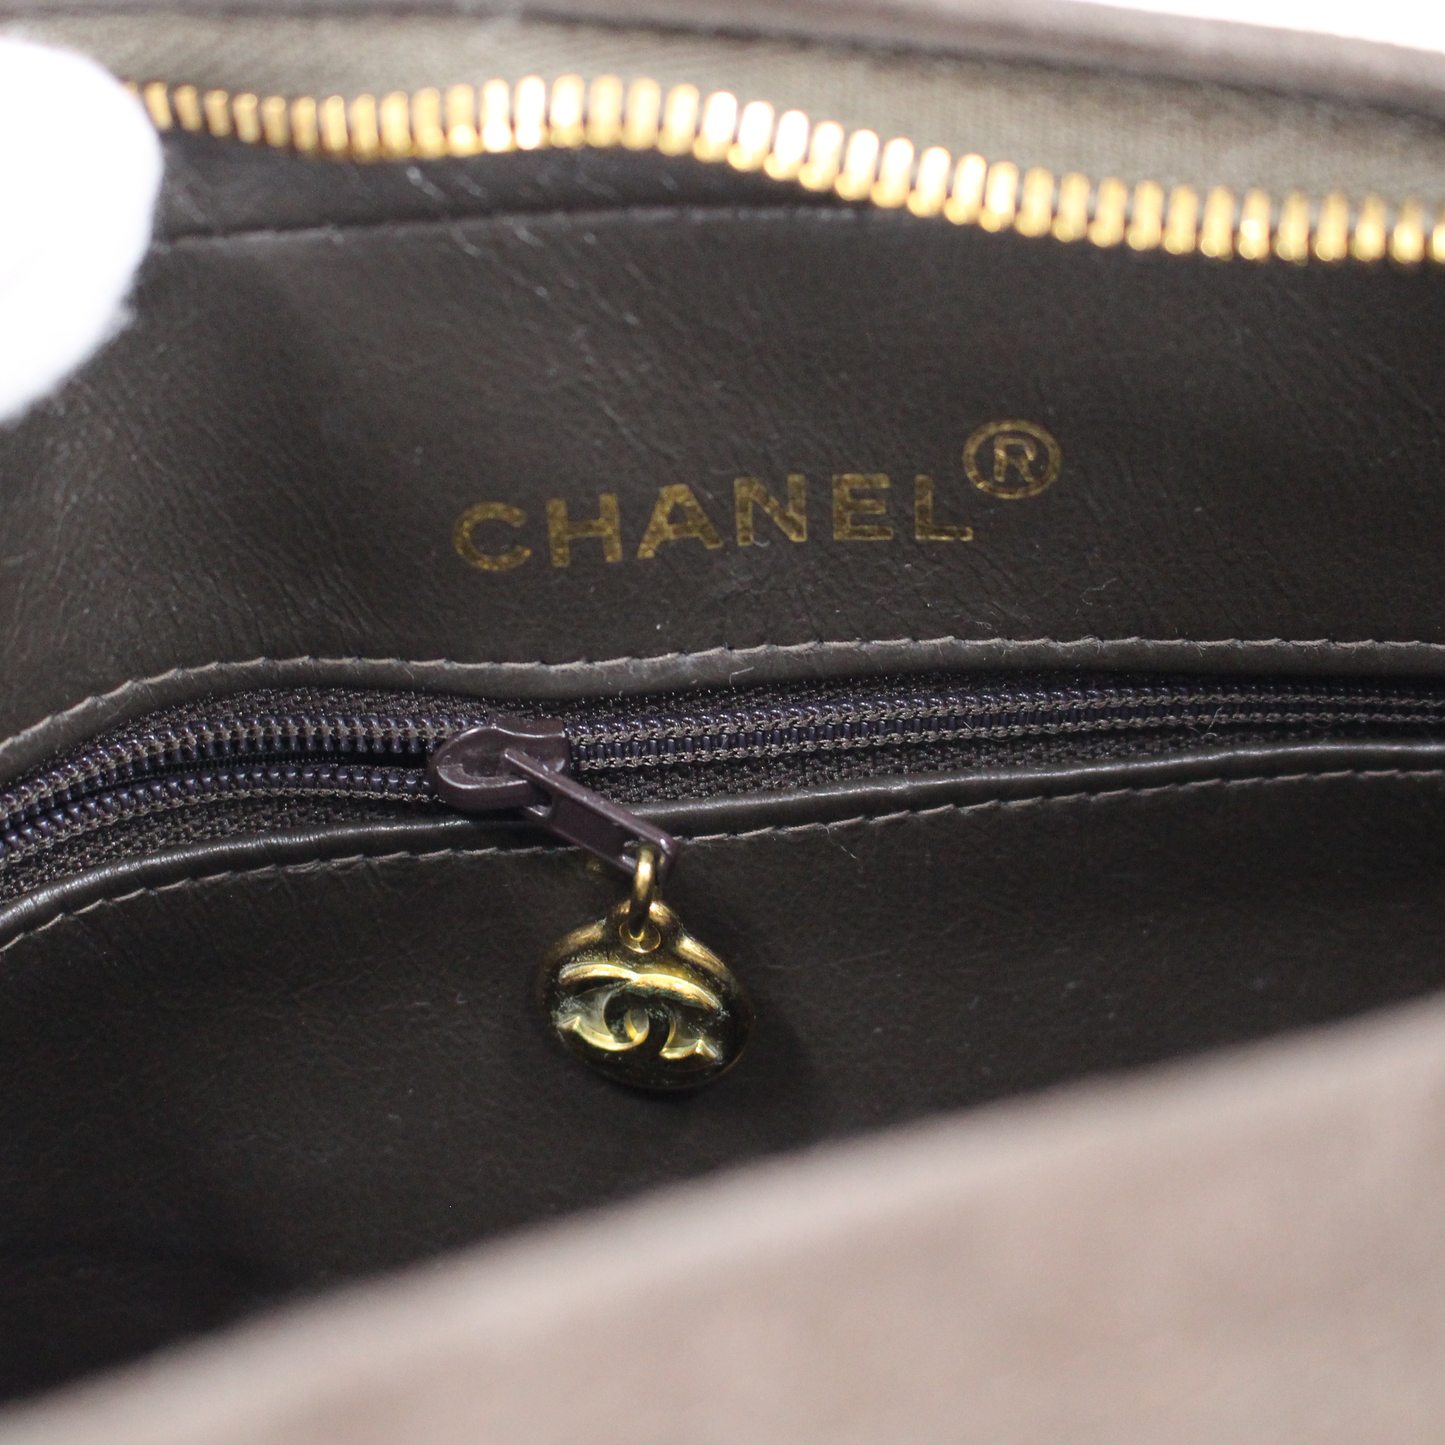 Chanel Mademoiselle Camera Bag